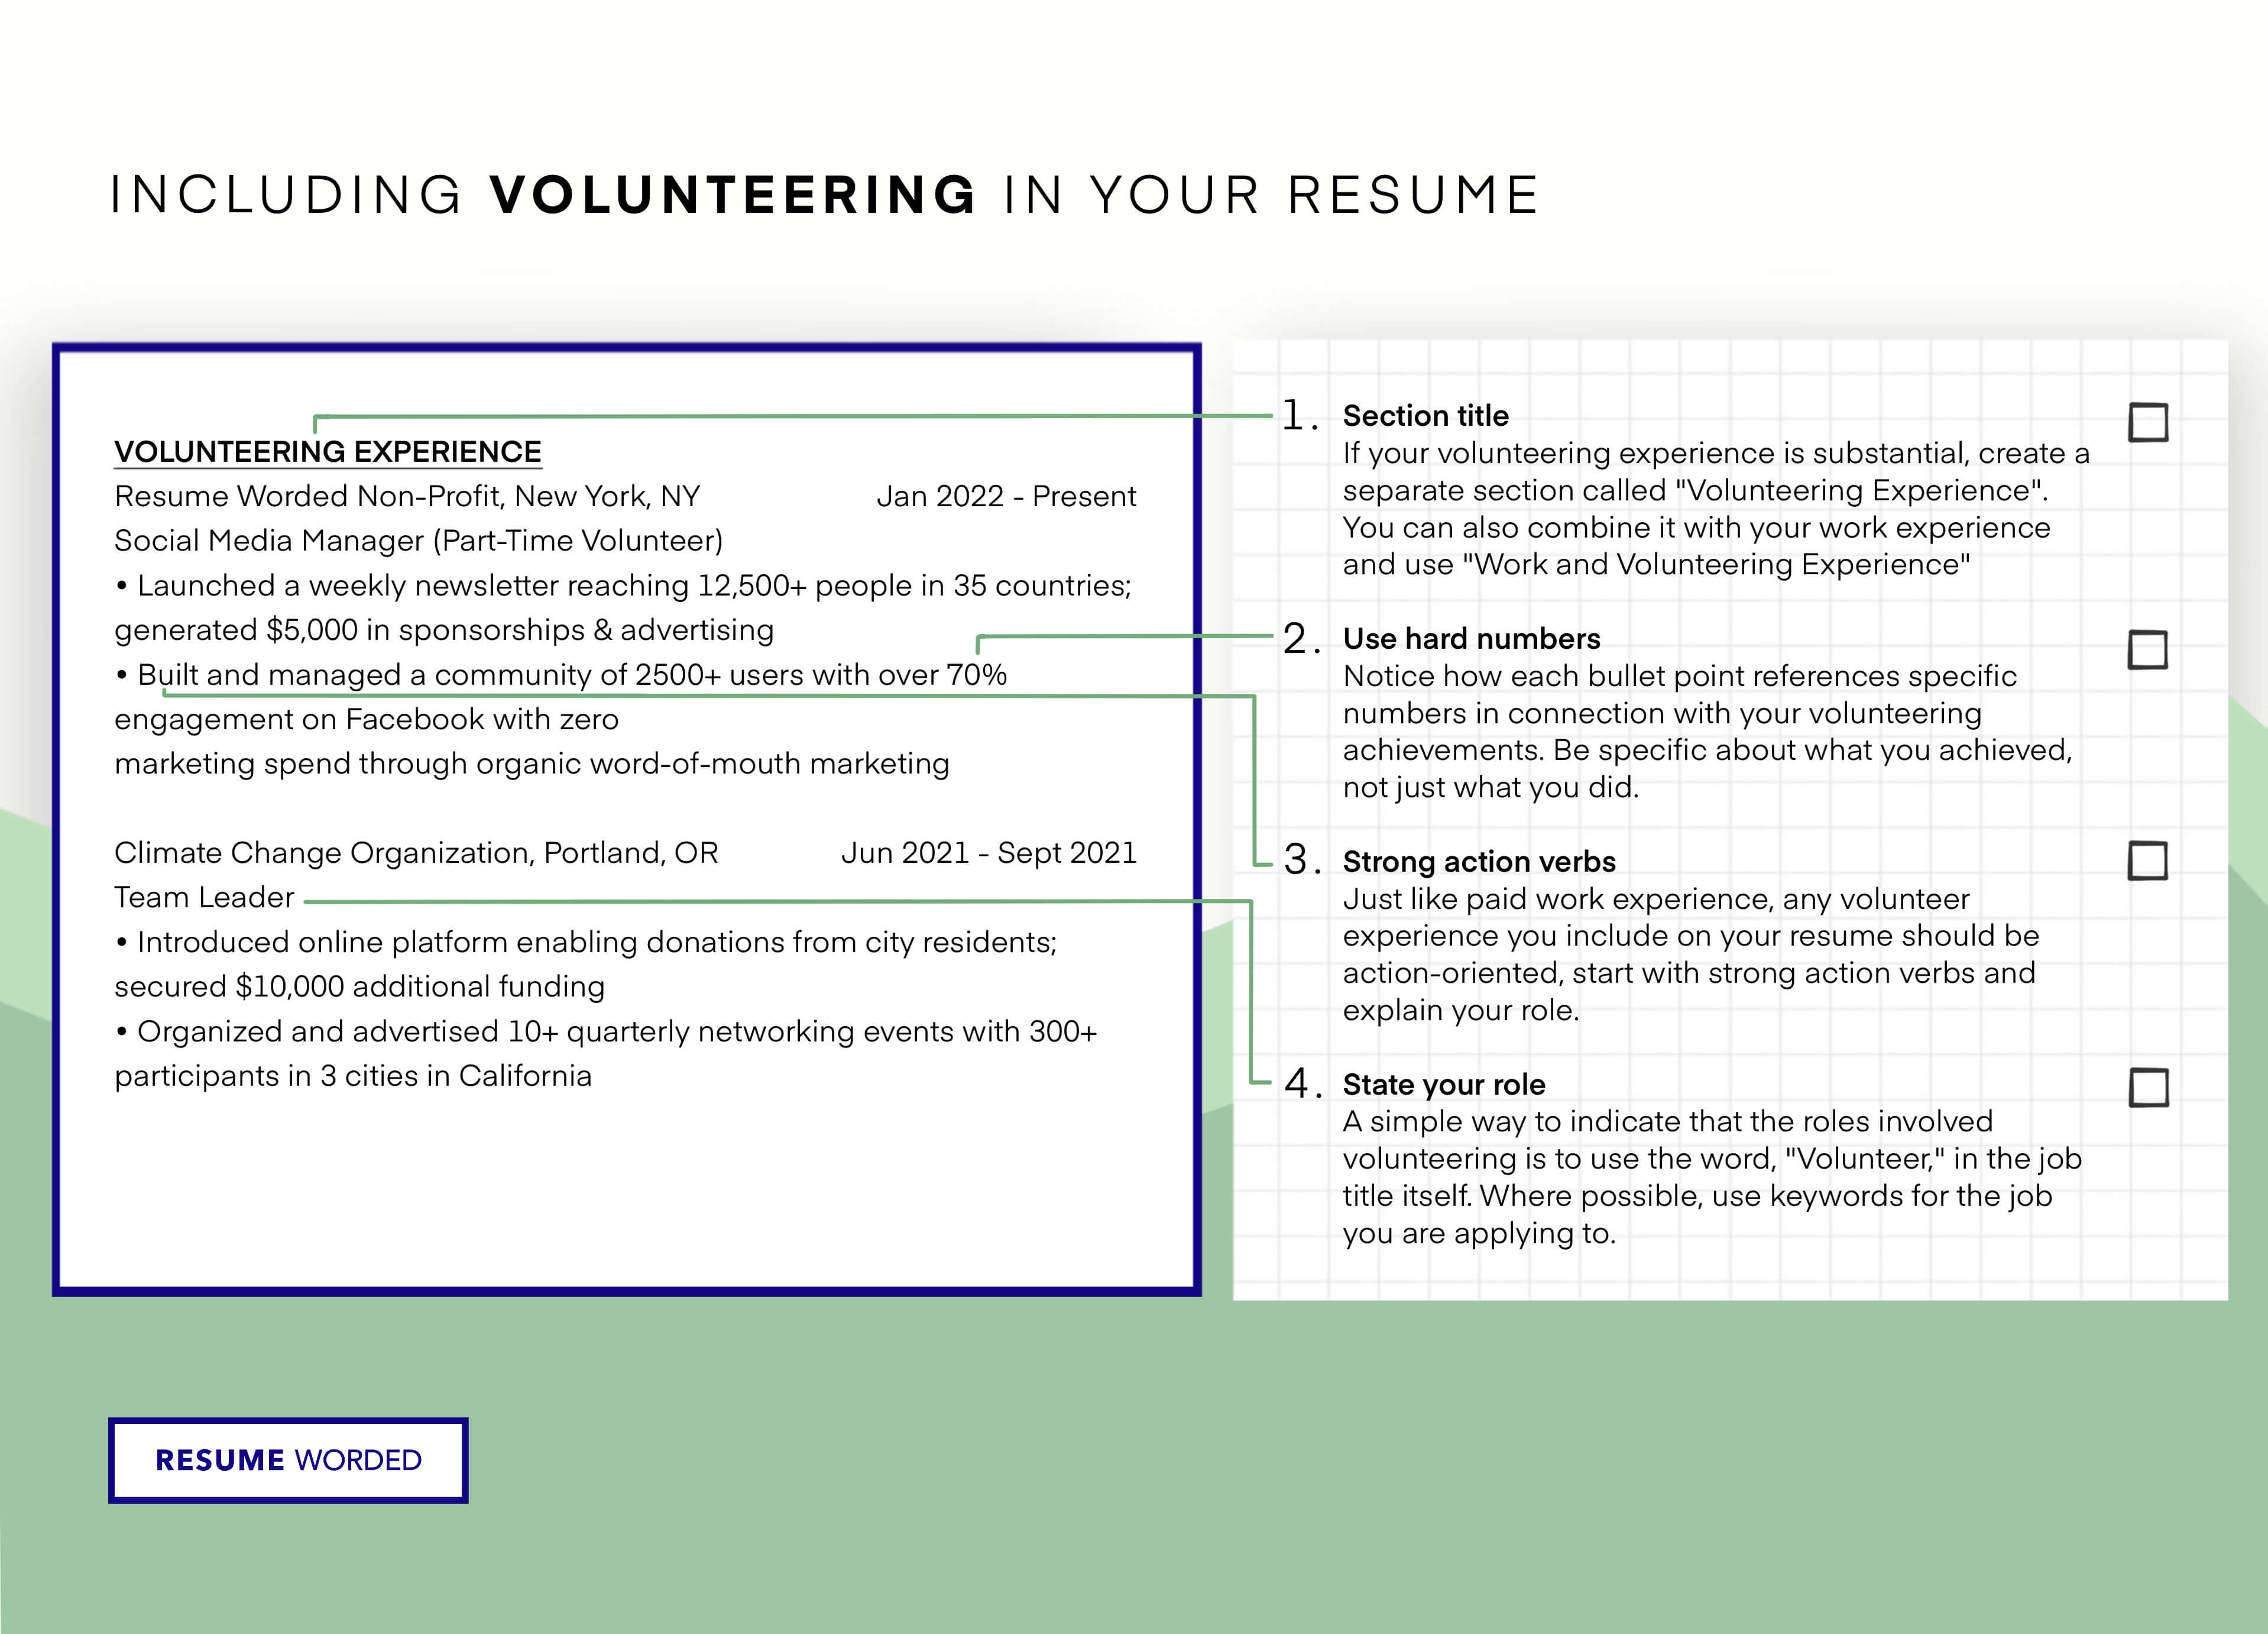 Include volunteering experience in IT. - IT Help Desk (Entry Level) Resume